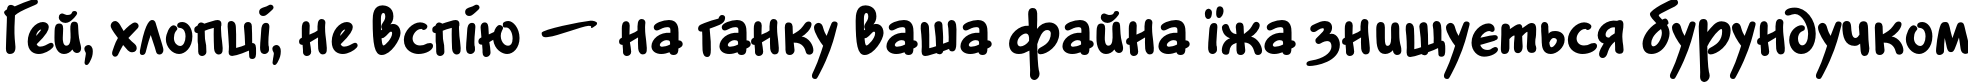 Пример написания шрифтом JakobX текста на украинском